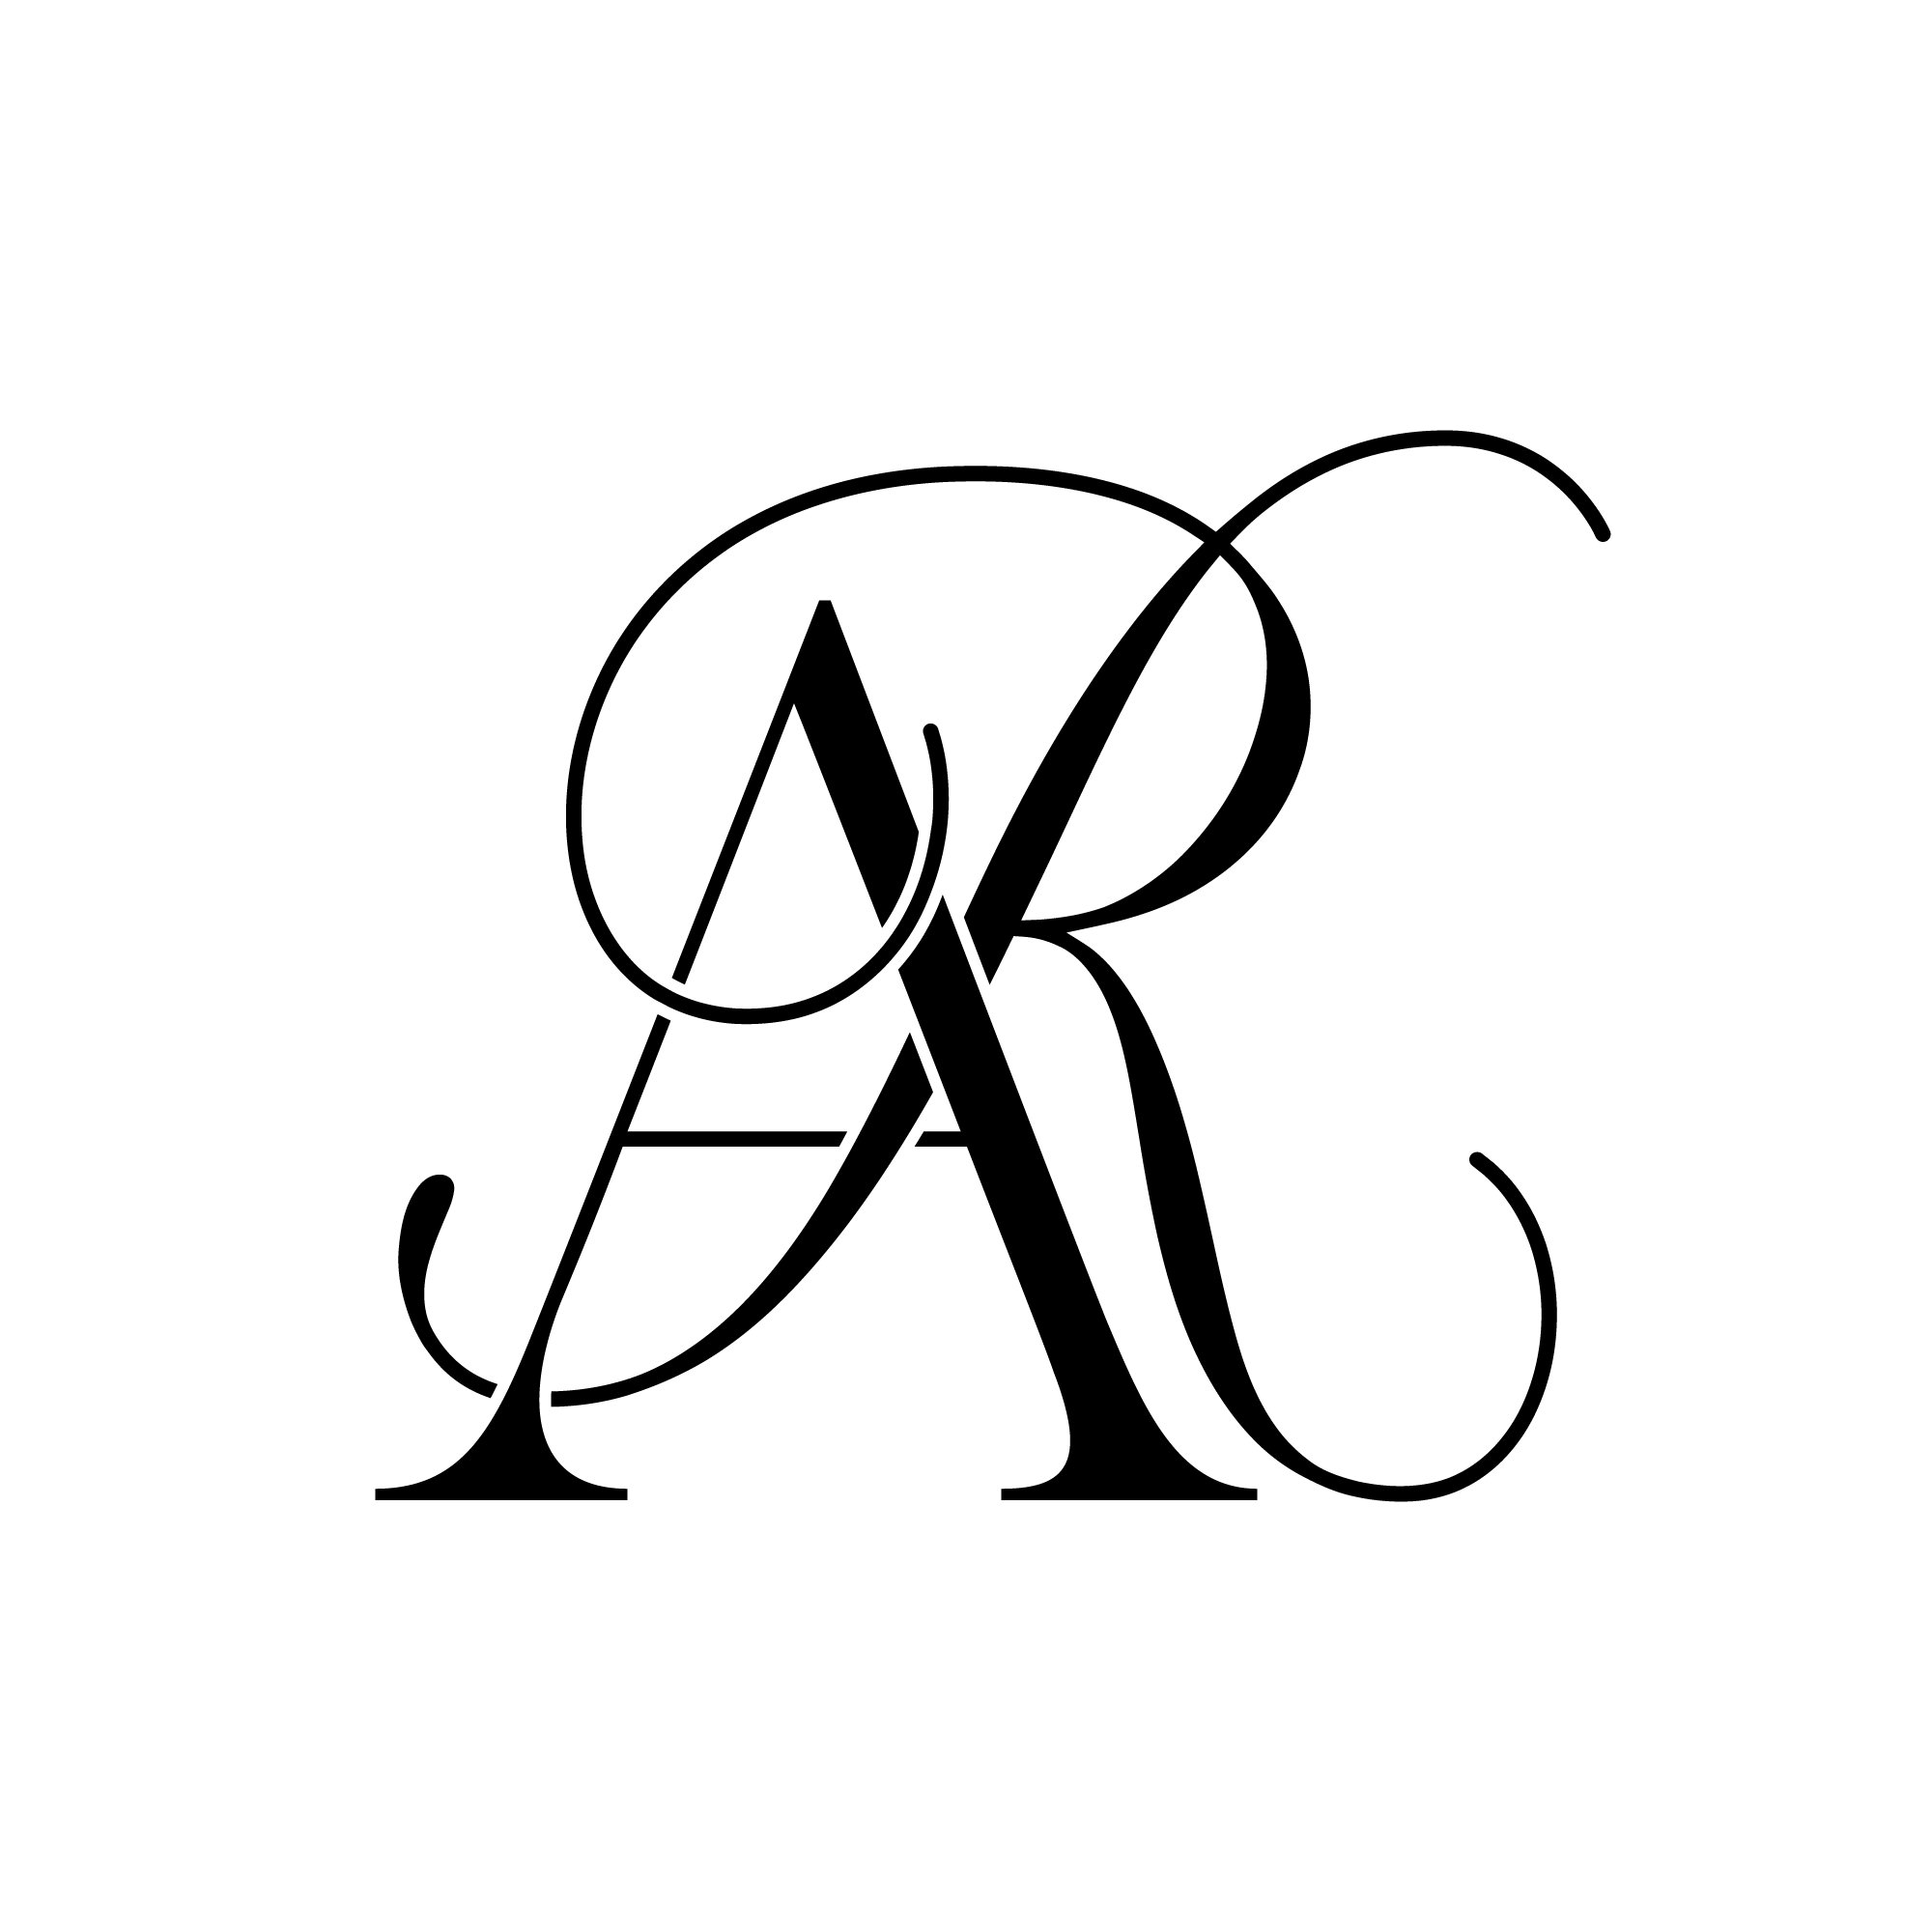 Royal Closet Organization - Buy Premade Readymade Logos for Sale